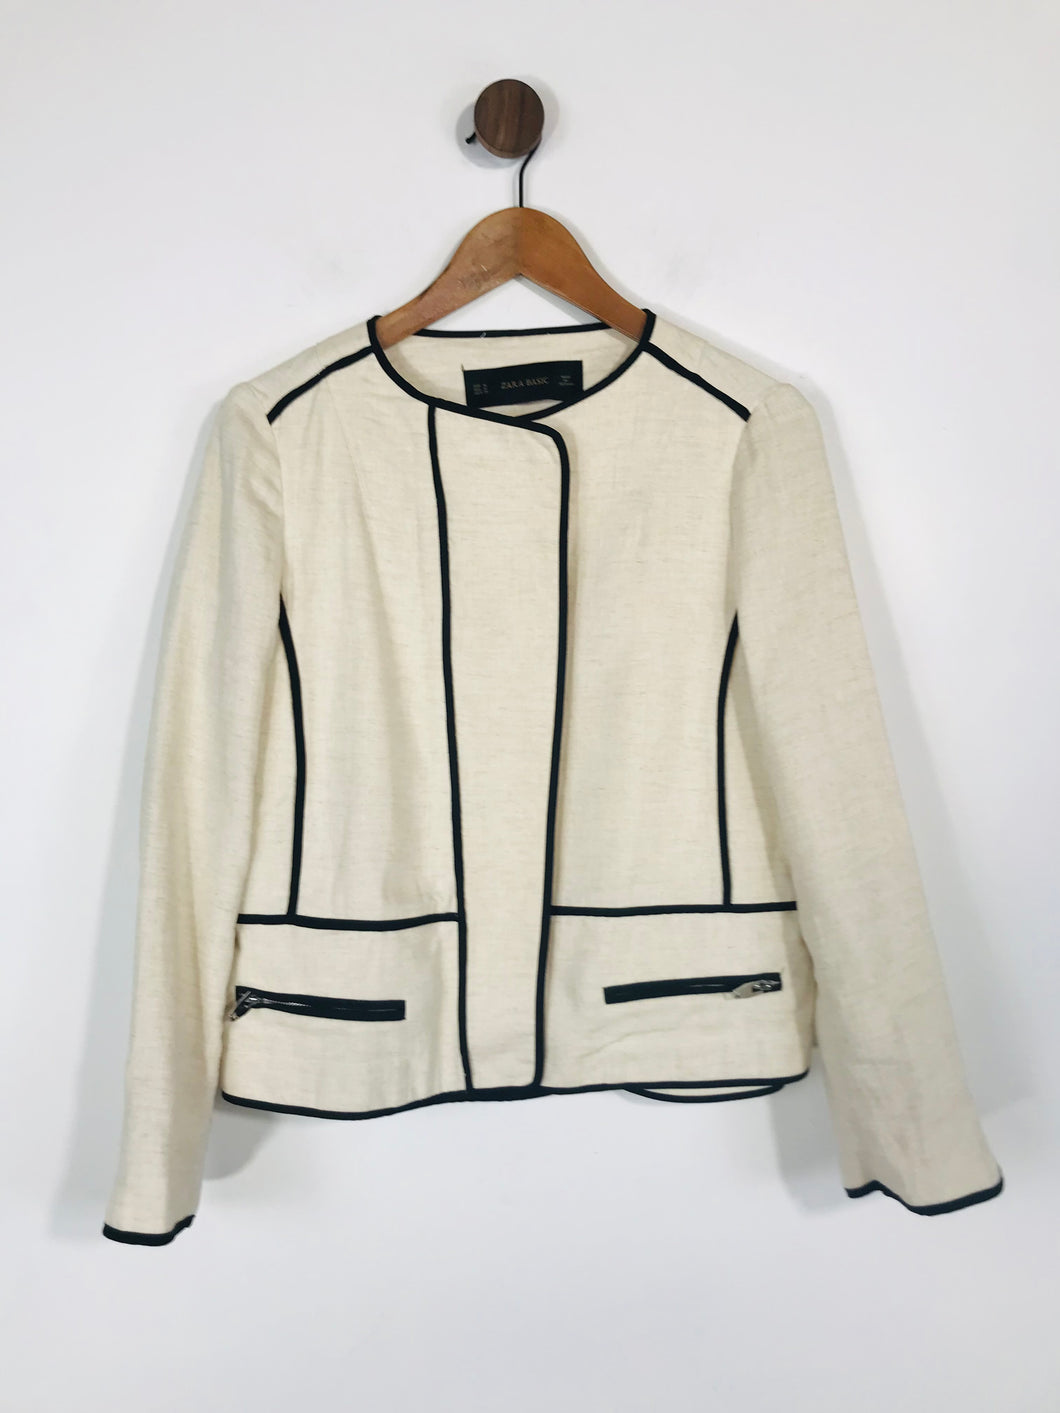 Zara Women's Linen Smart Bomber Blazer Jacket | M UK10-12 | Beige